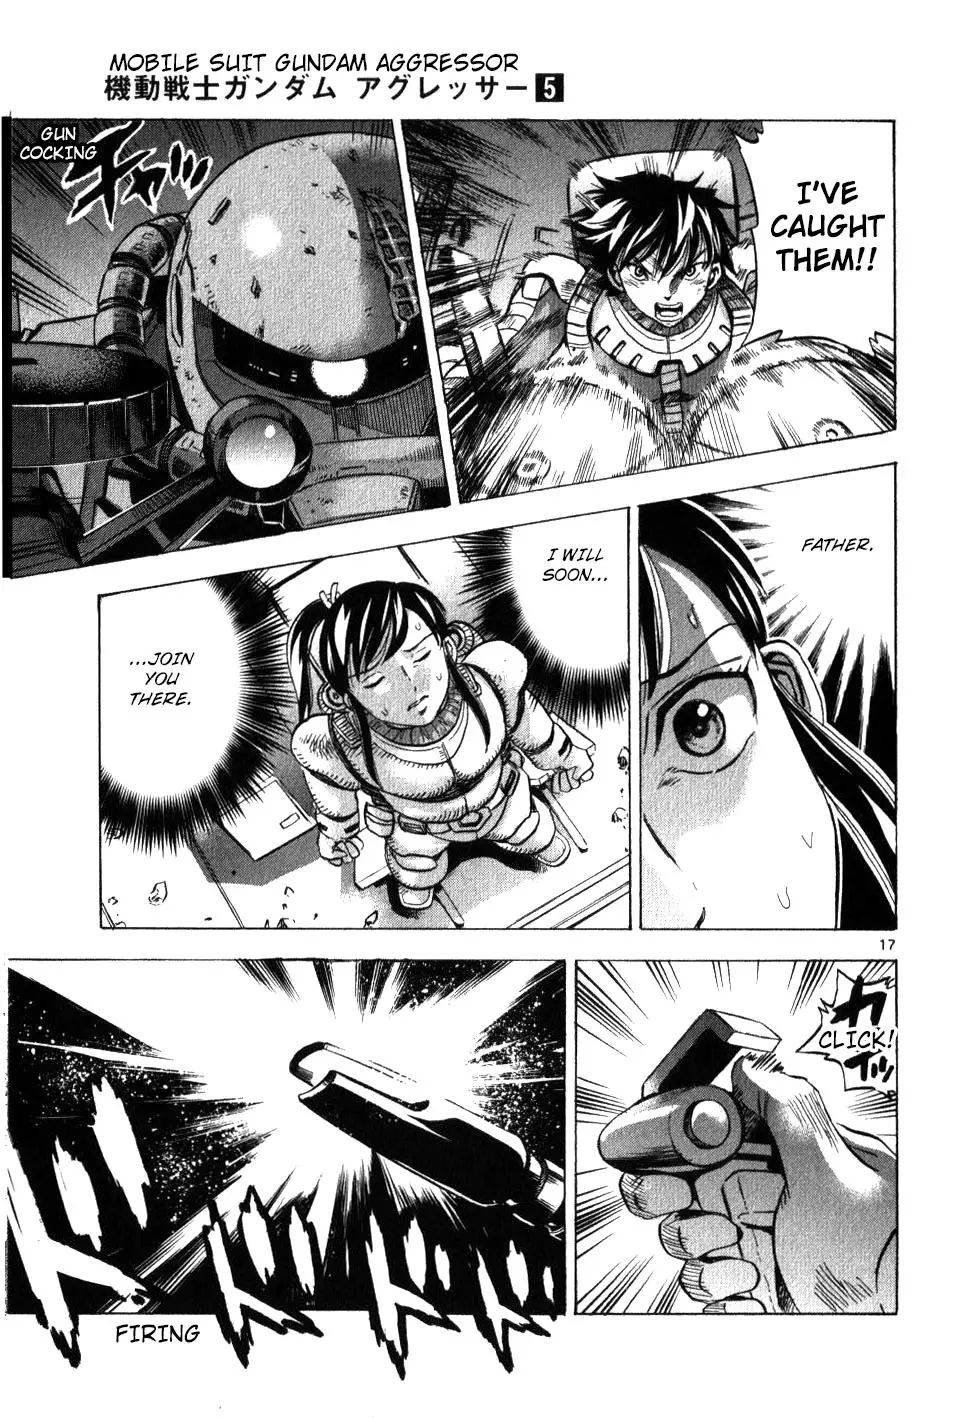 Mobile Suit Gundam Aggressor - 24 page 15-cb8a7c8b